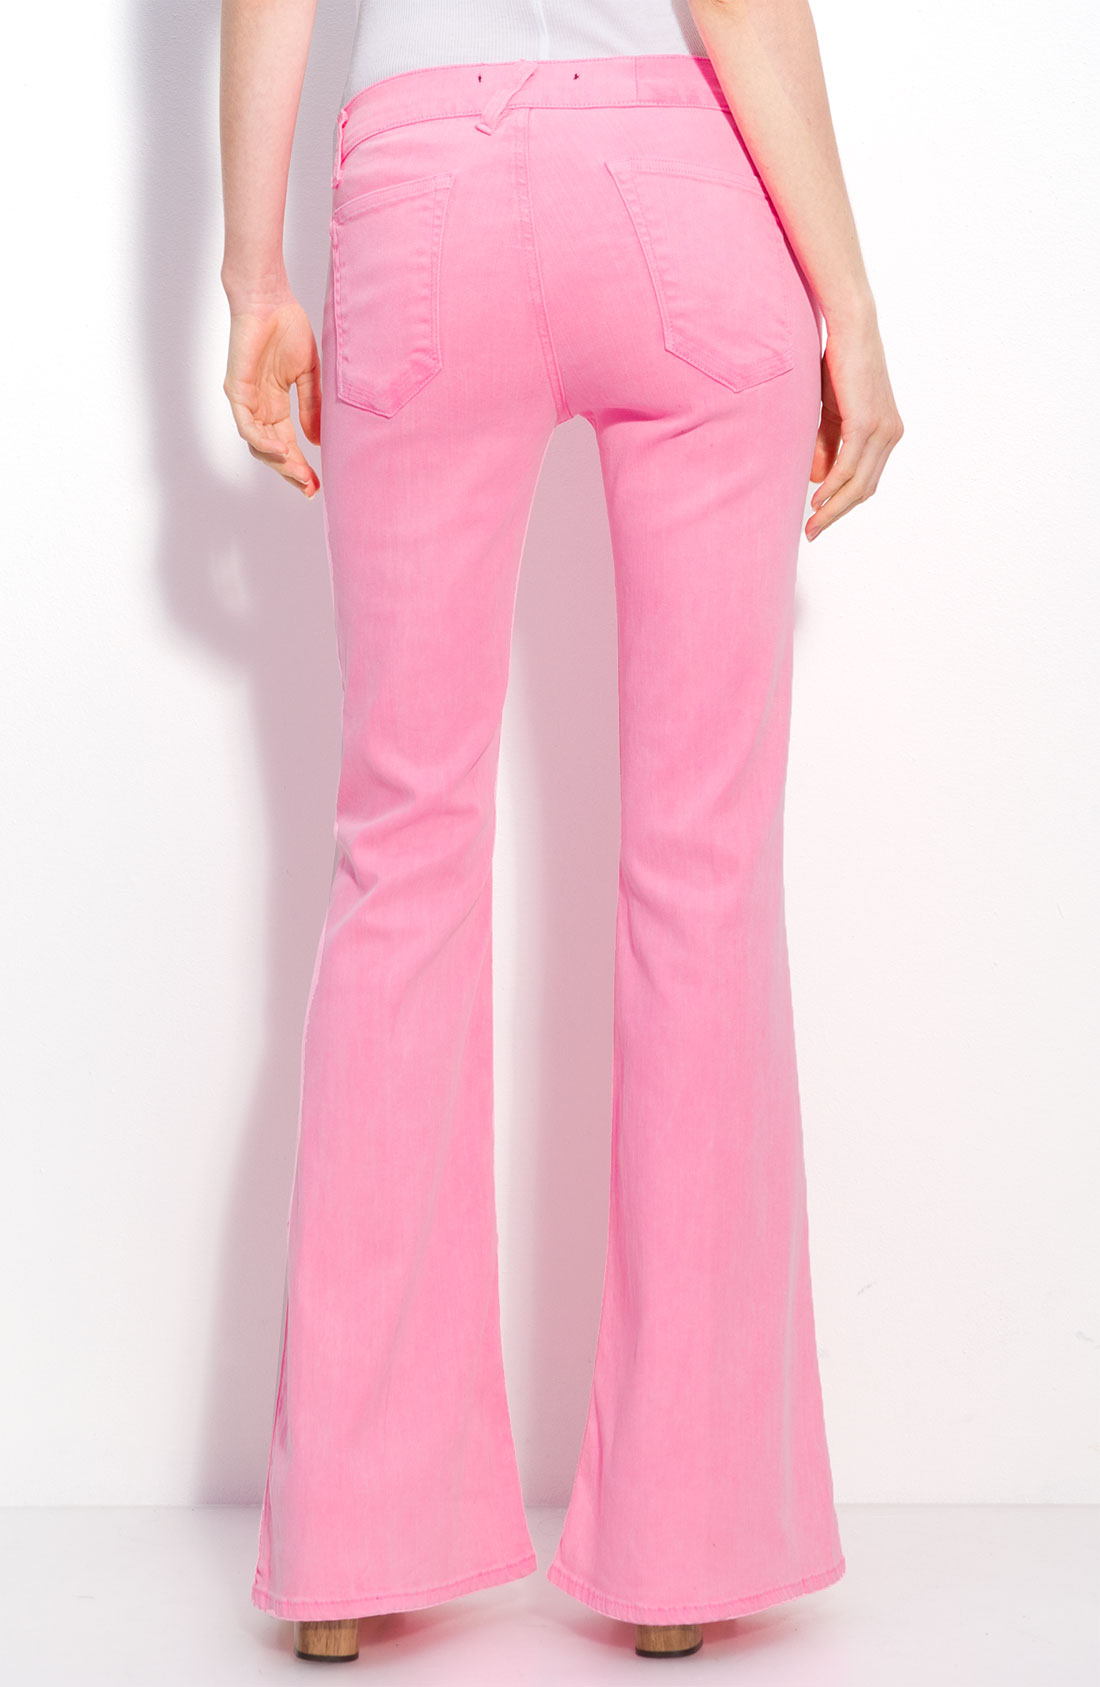 Textile Elizabeth And James Flare Leg Stretch Jeans in Pink (shocking ...